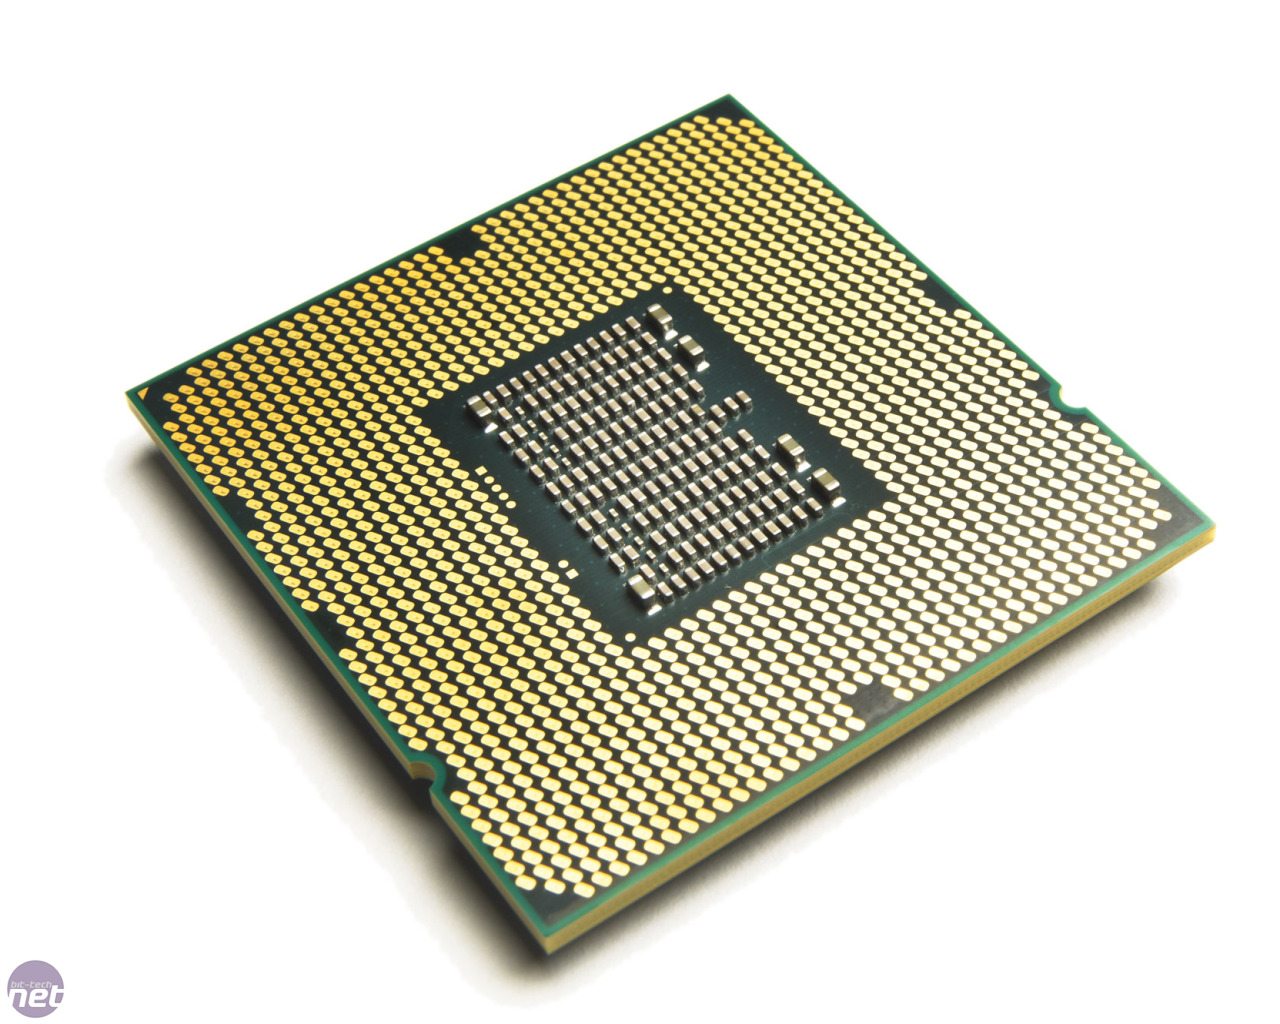 Intel Core I7 Processor Extreme Edition I7-990x Review